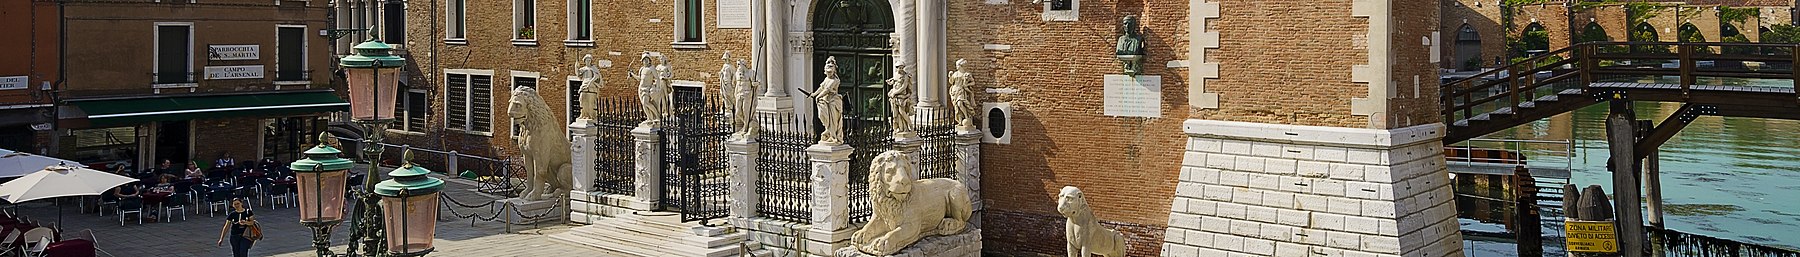 H κύρια είσοδος του ναυστάθμου Βενετίας με τα λιοντάρια του Πειραιά και Δήλου